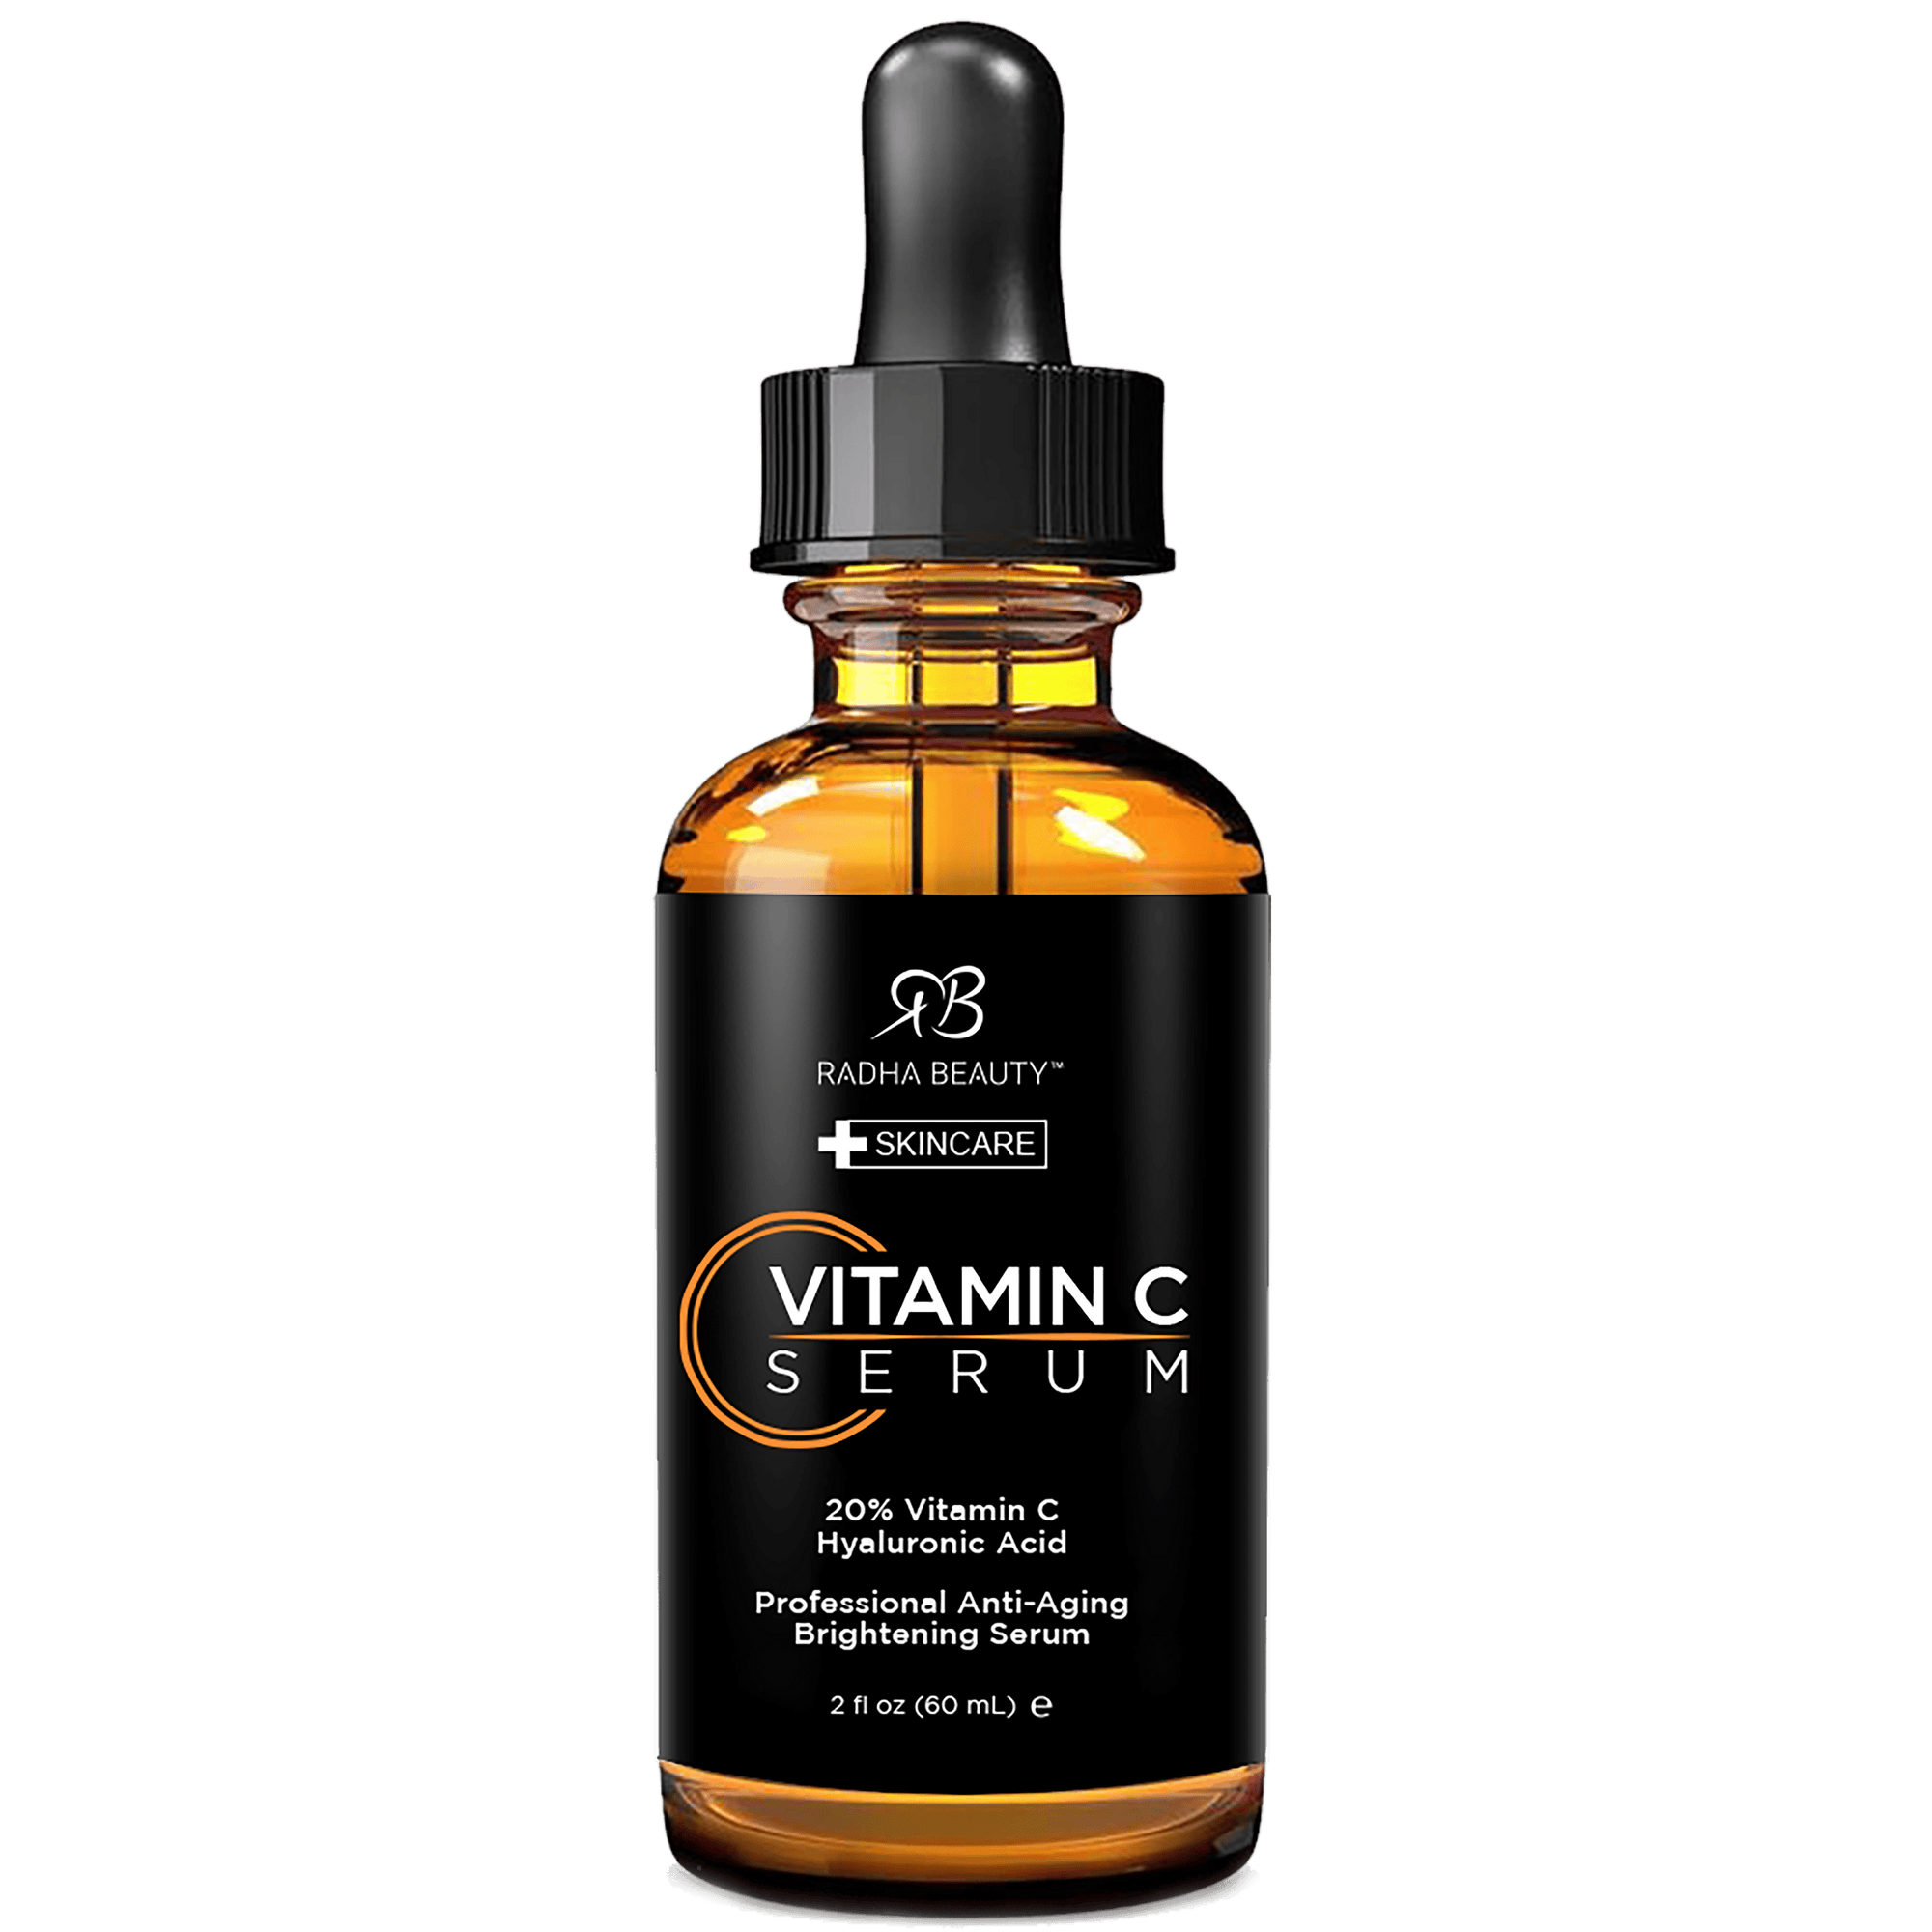 Peach & Lily Transparen-C Pro Spot Treatment w/ Powerful 20% Vitamin C  (0.67 oz)